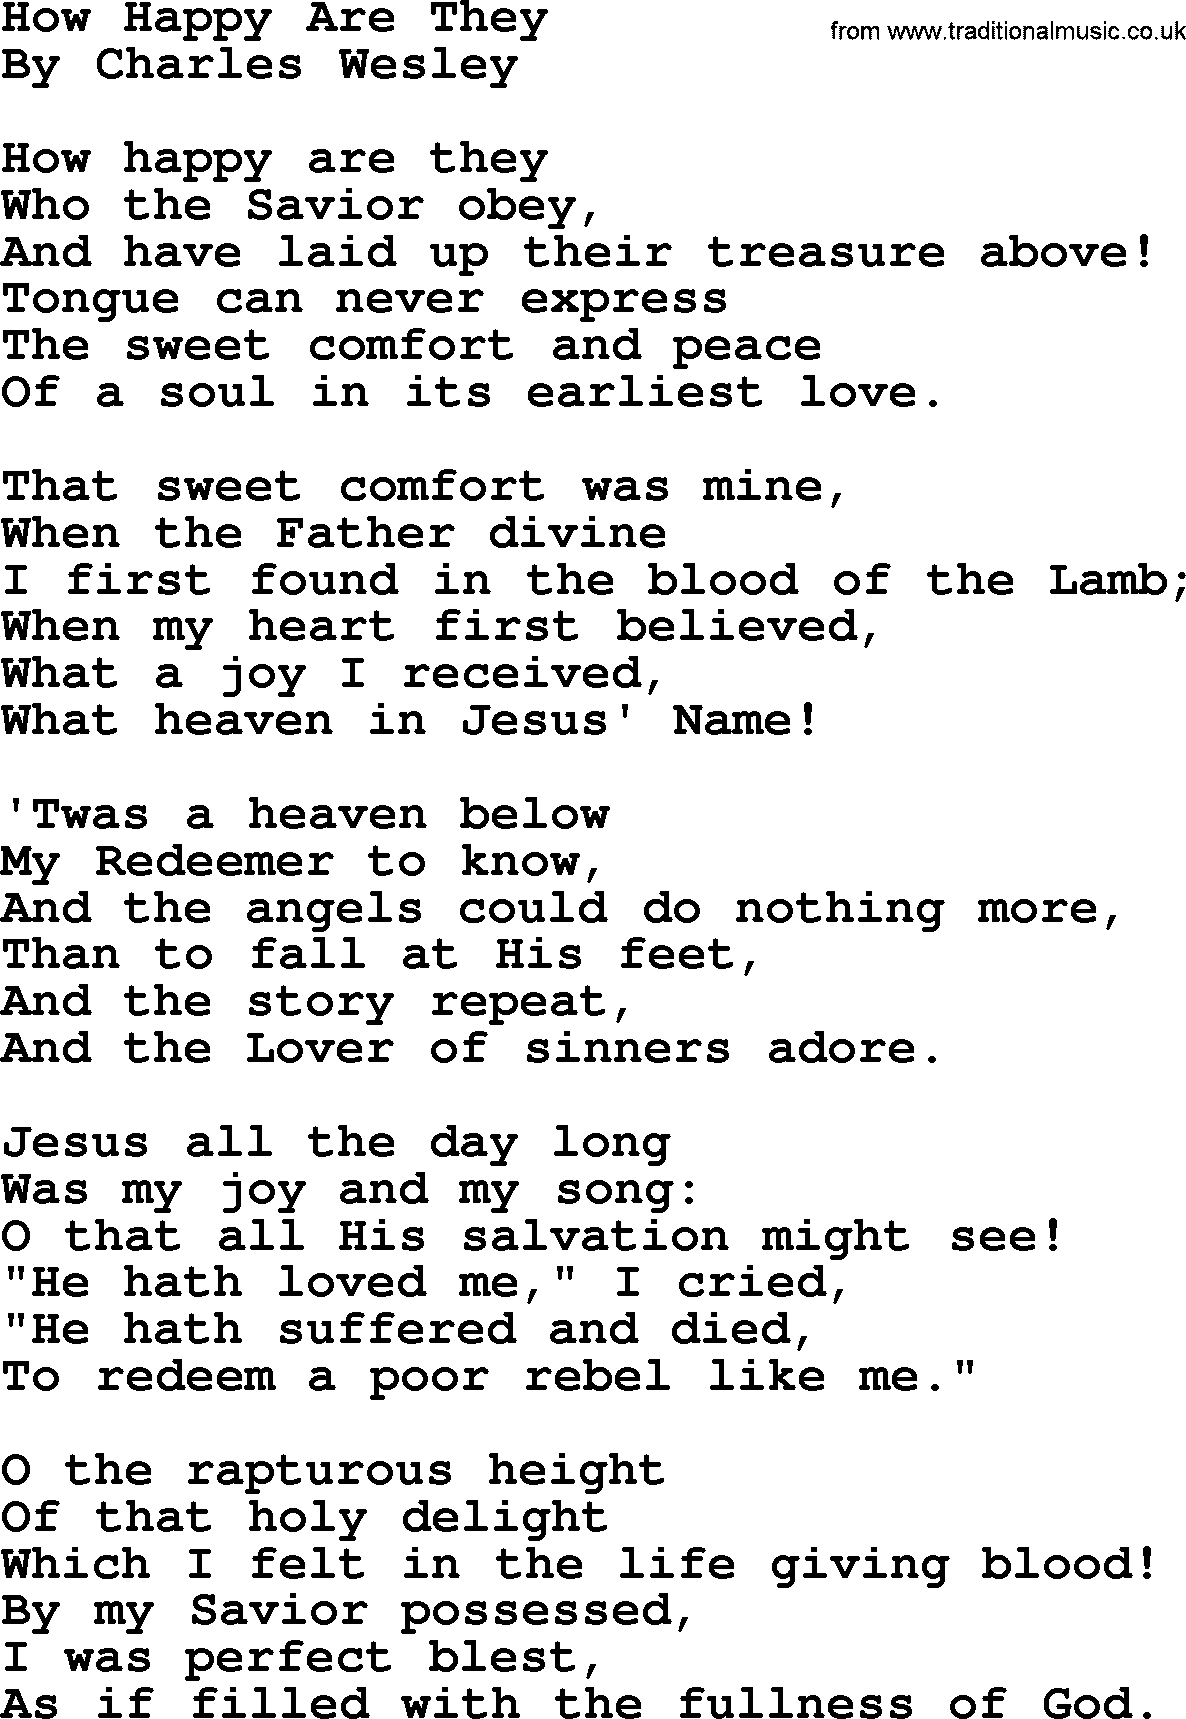 Charles Wesley hymn: How Happy Are They, lyrics